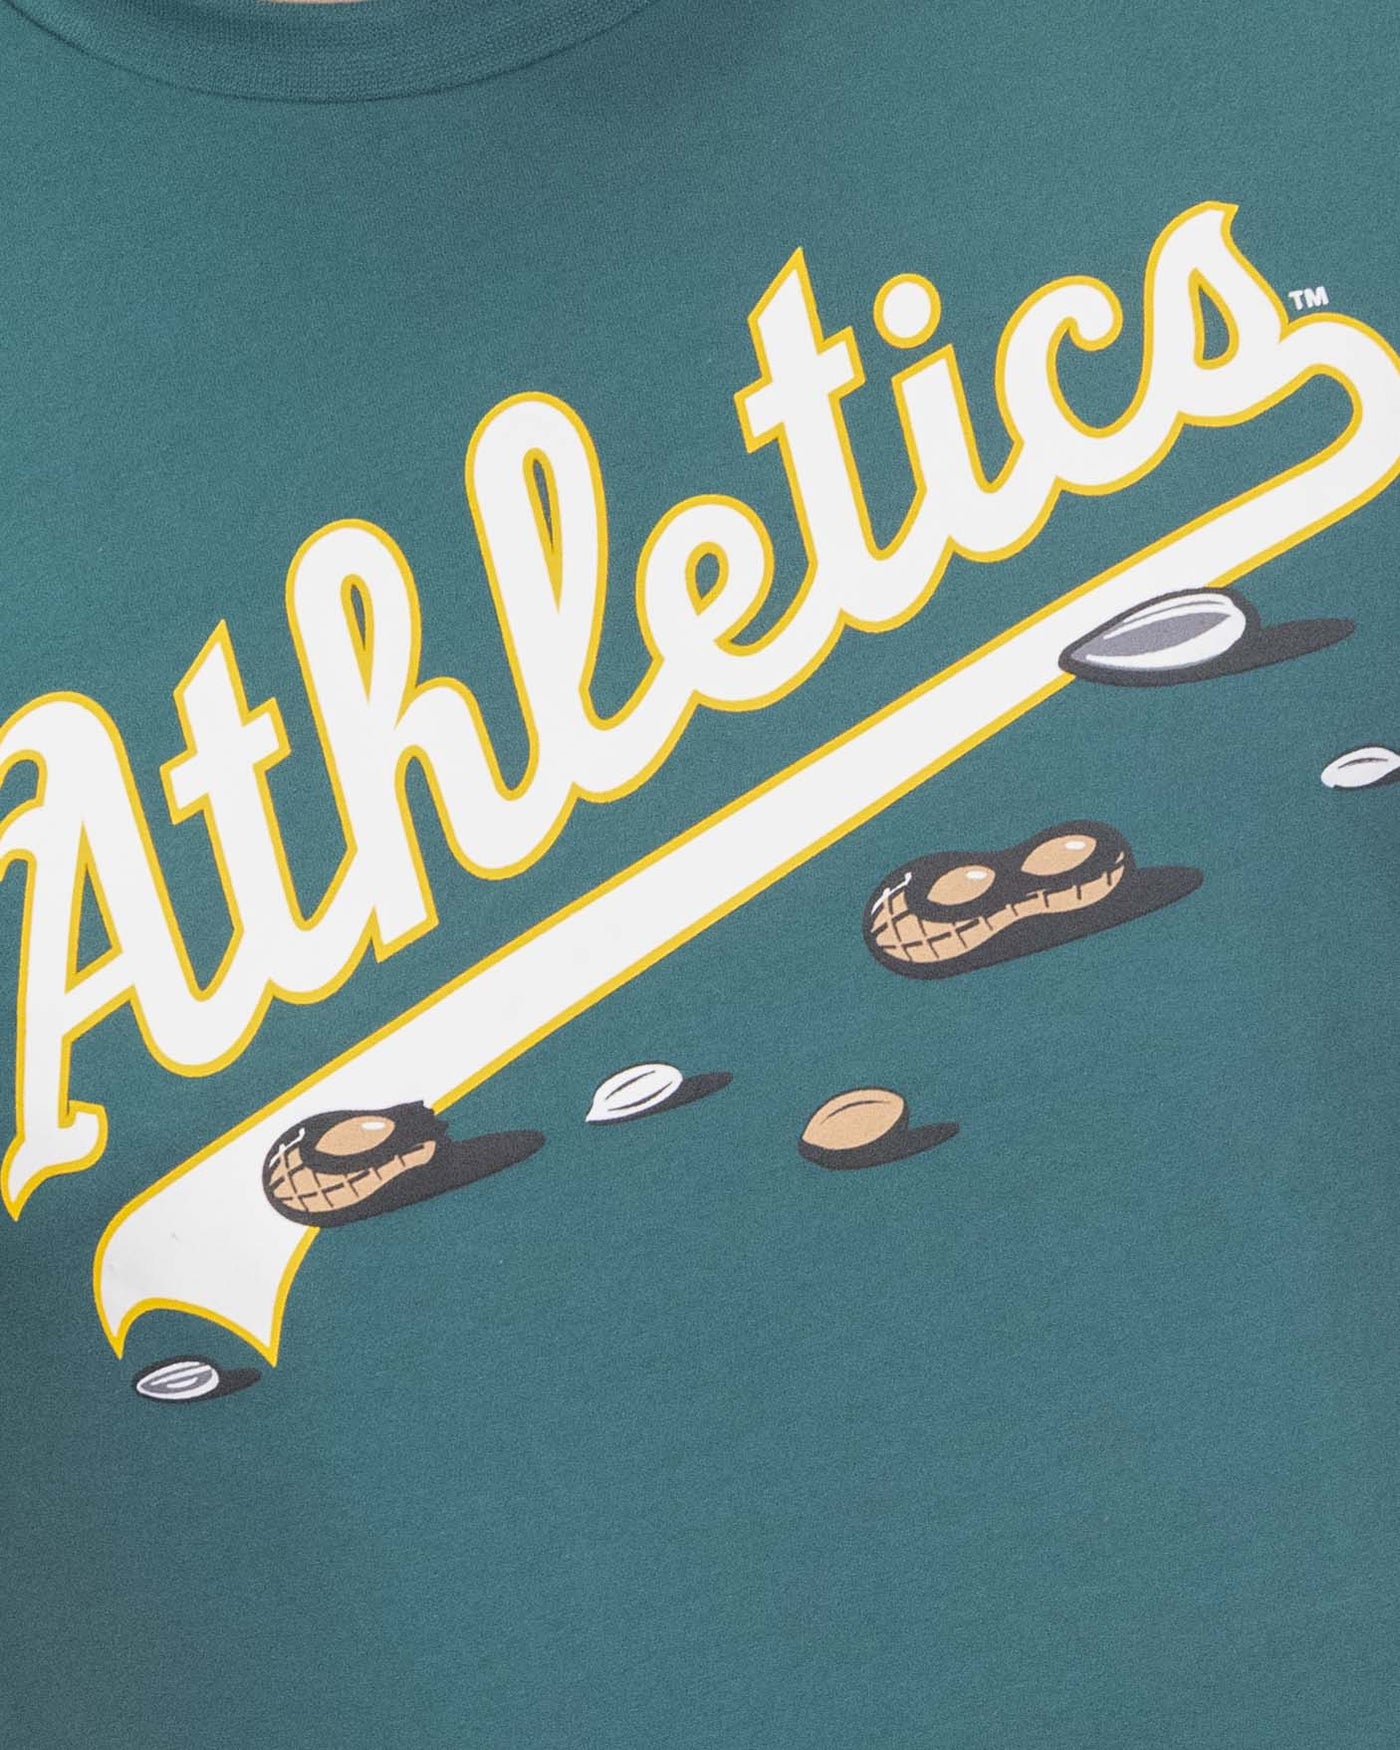 Get Your Peanuts! - Oakland Athletics